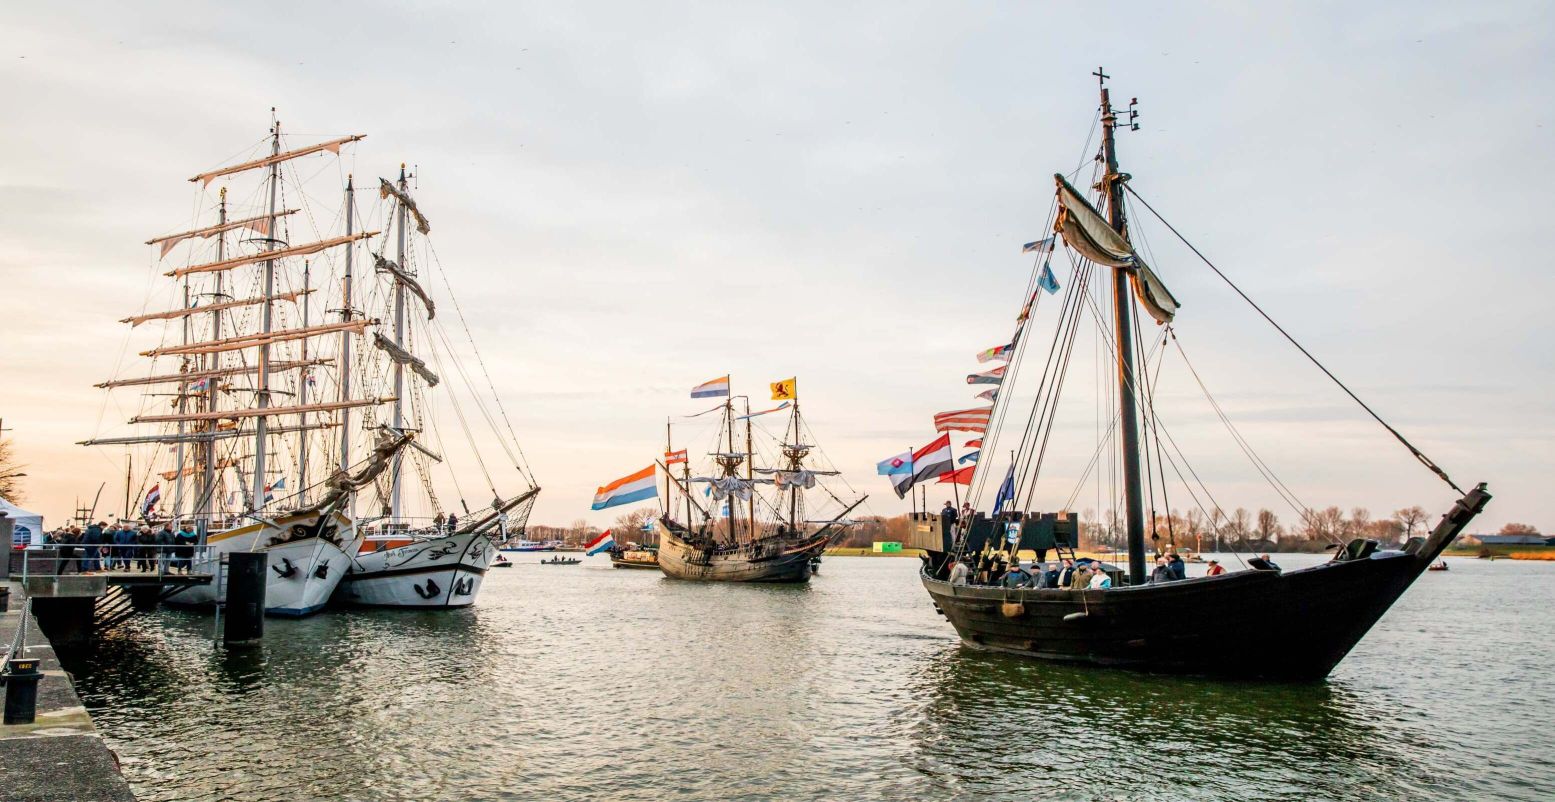 Indrukwekkende boten en eindeloos vertier. Foto: Sail Kampen, Richard Tennekes.